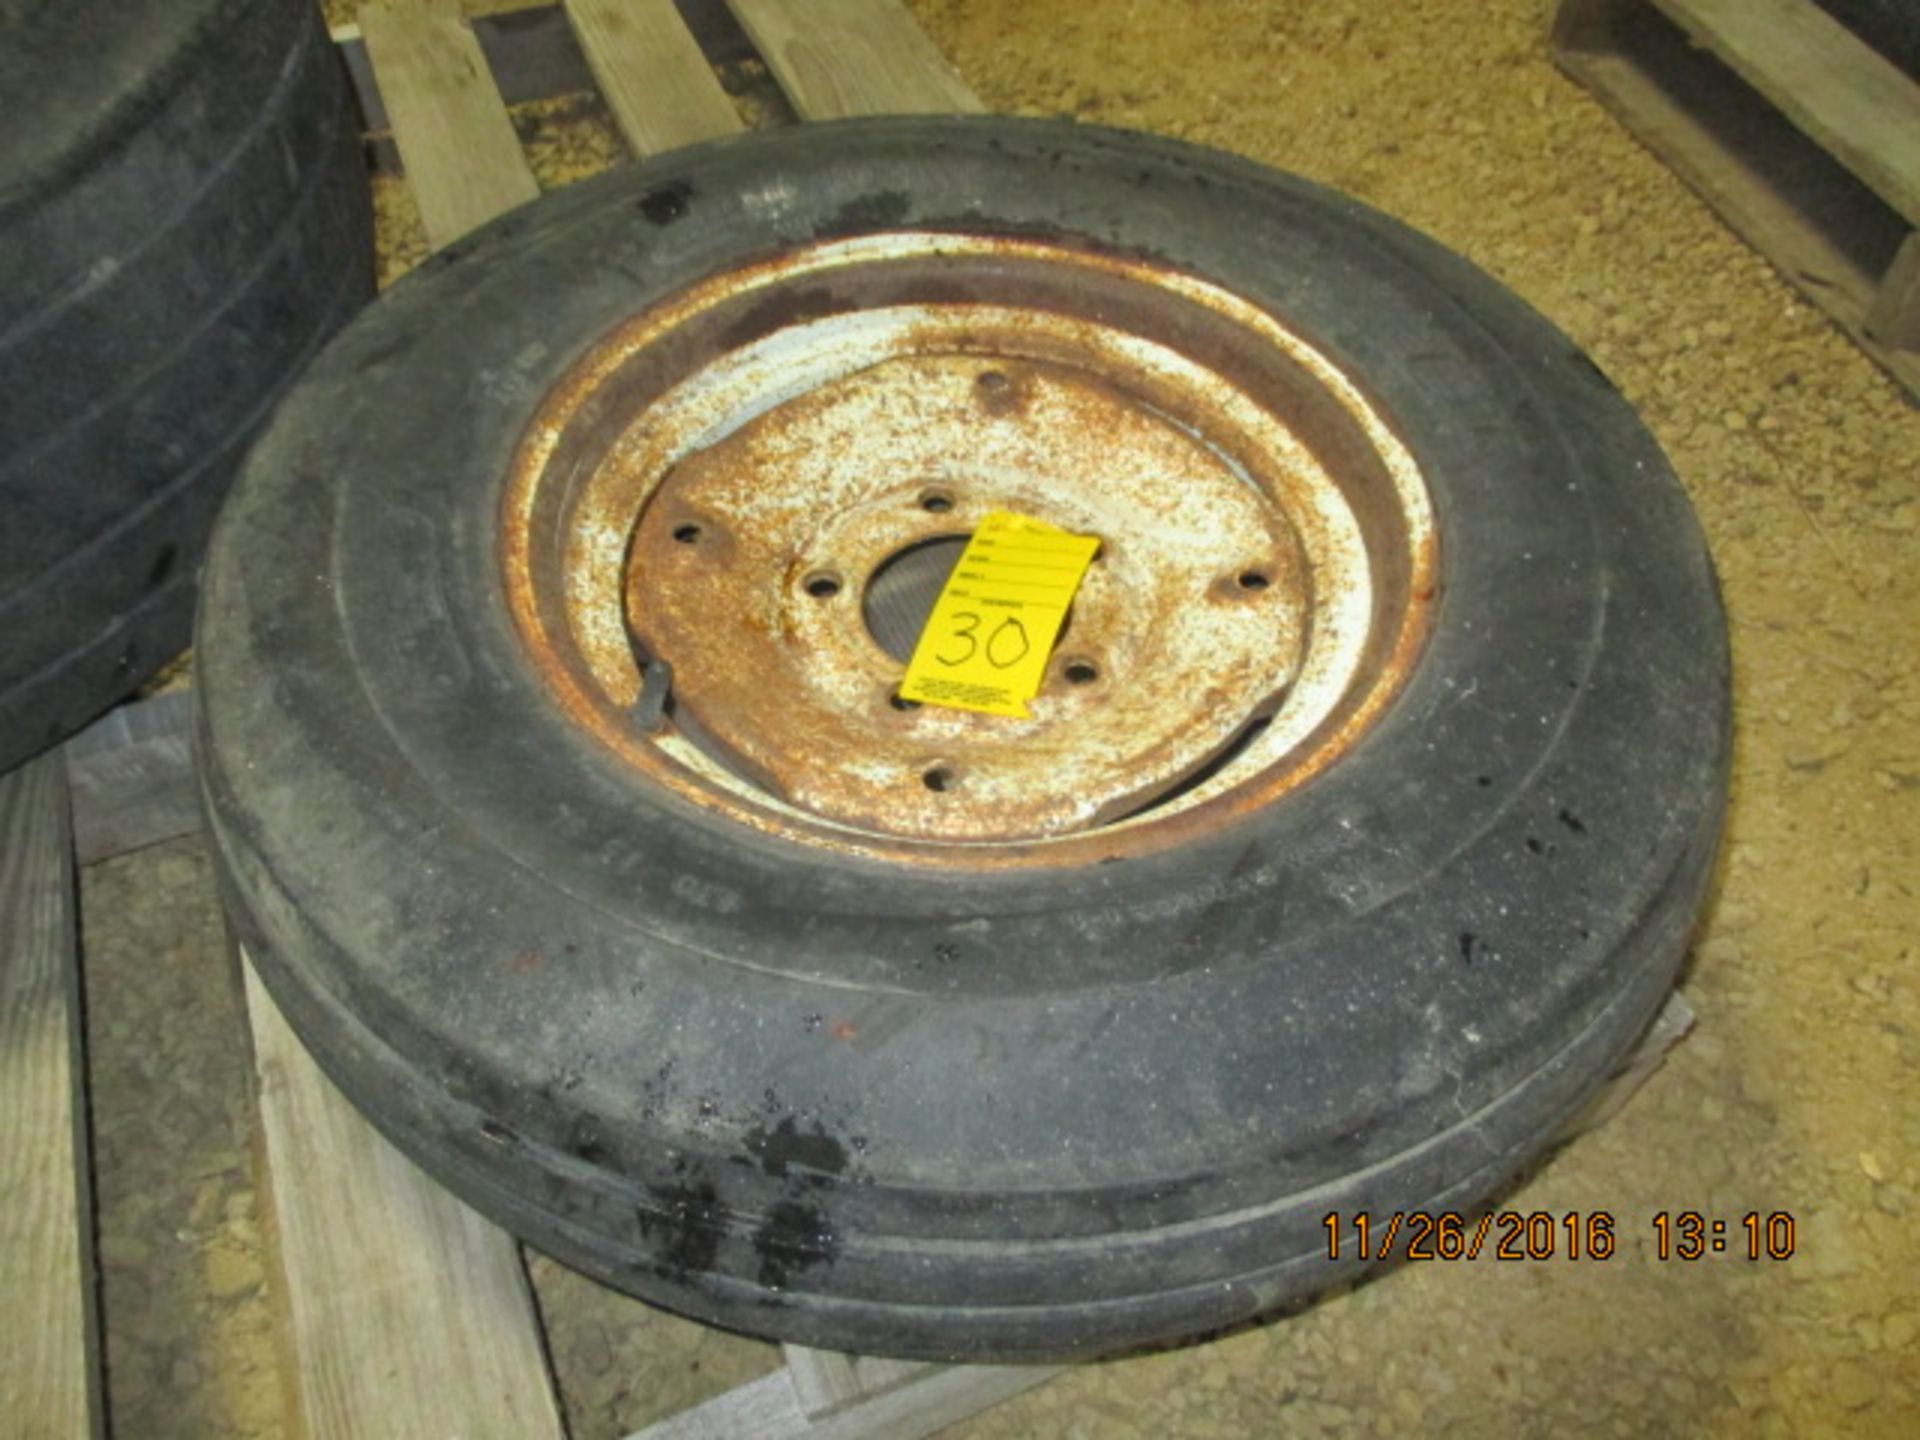 6.70-15 8L implement tire/wheel, (5) hole